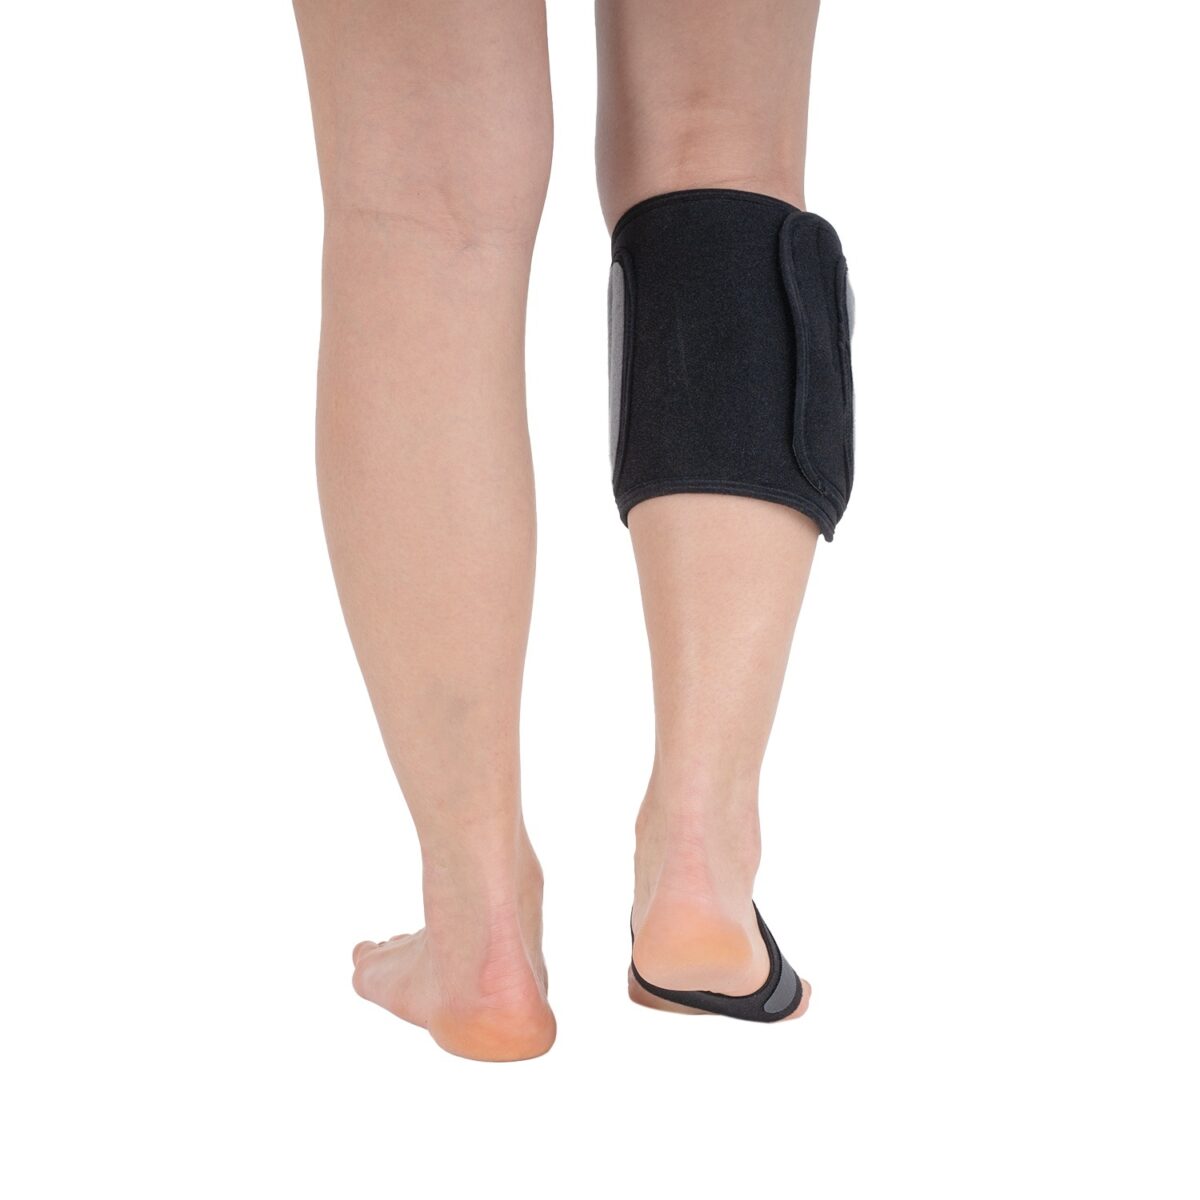 wingmed orthopedic equipments W613 dorsi flexion bandage plus low foot 40